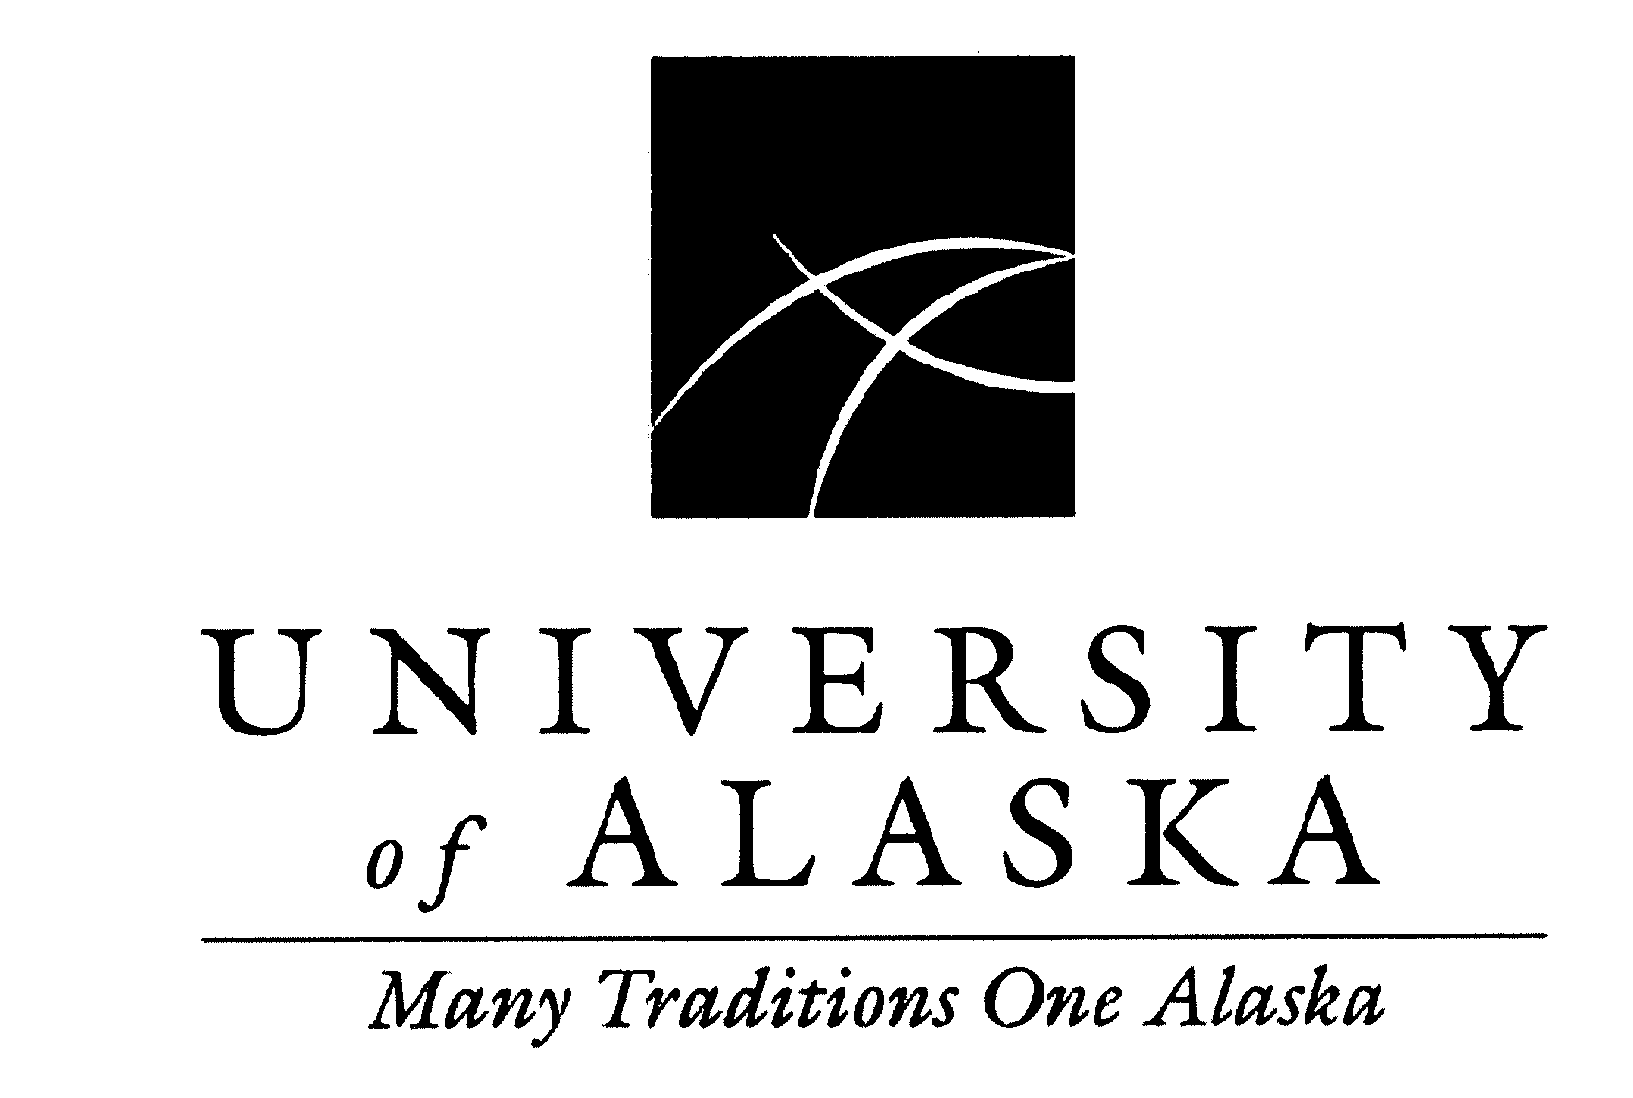  UNIVERSITY OF ALASKA MANY TRADITIONS ONE ALASKA